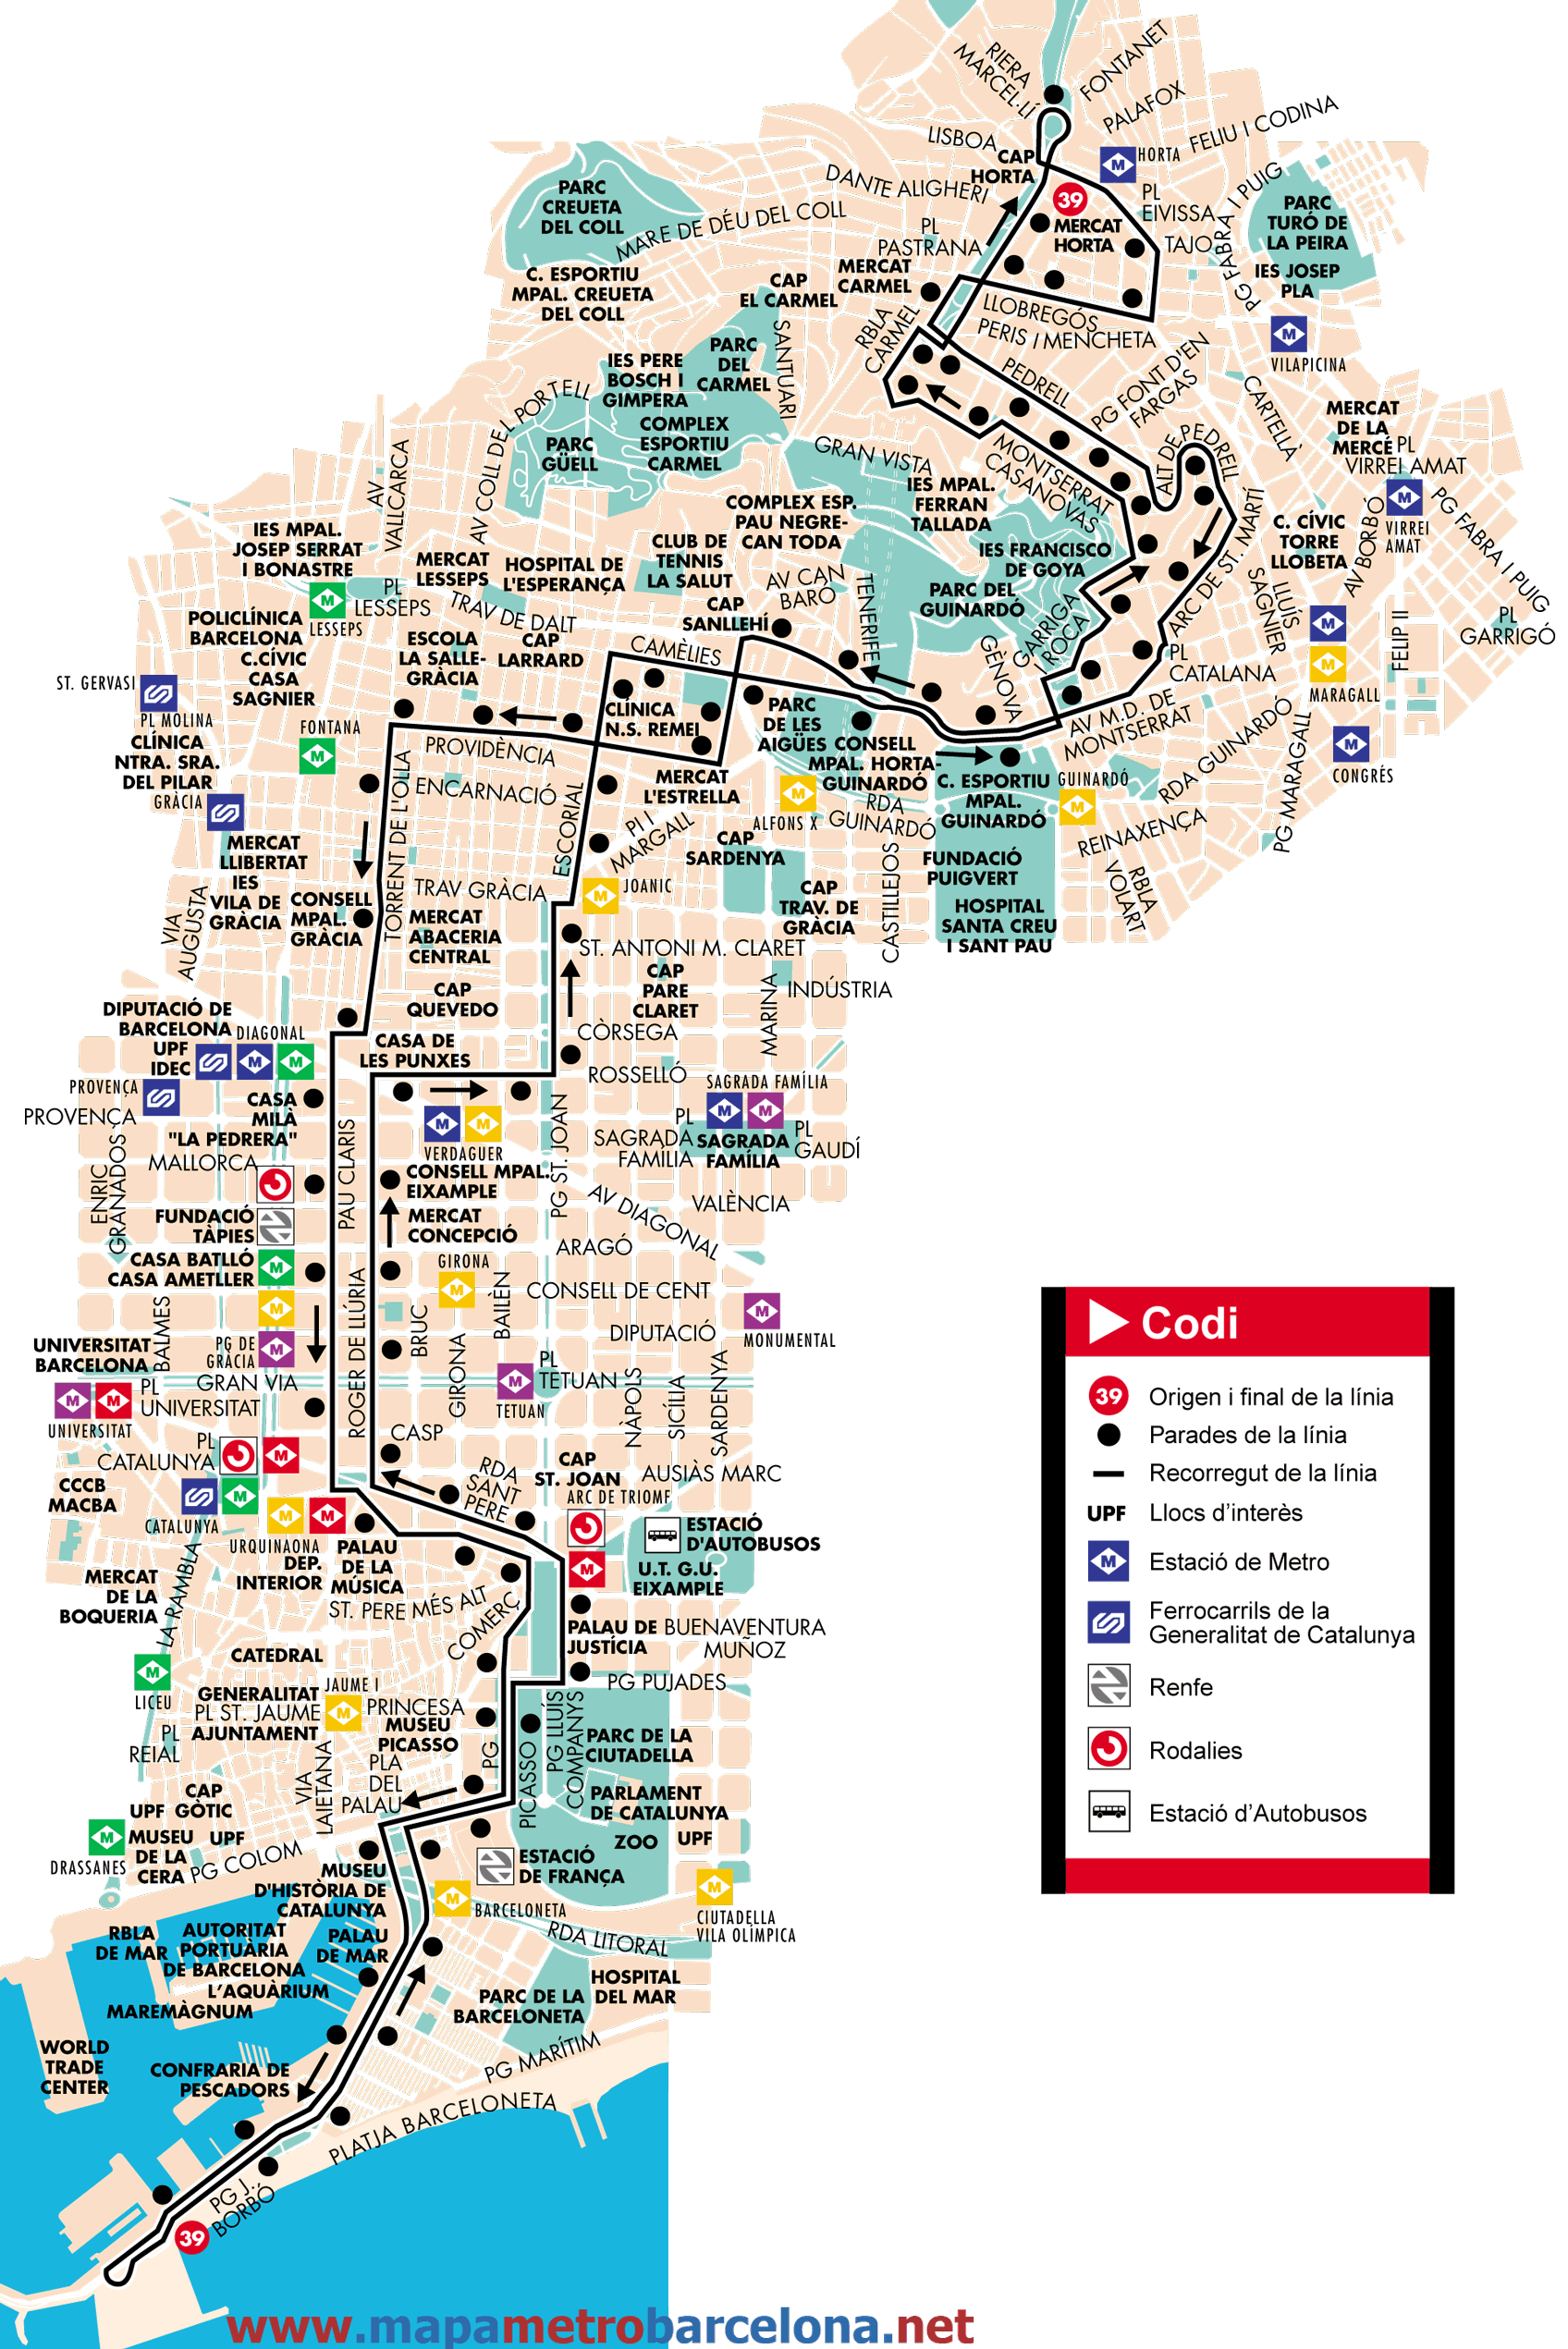 Barcelona bus map line 39